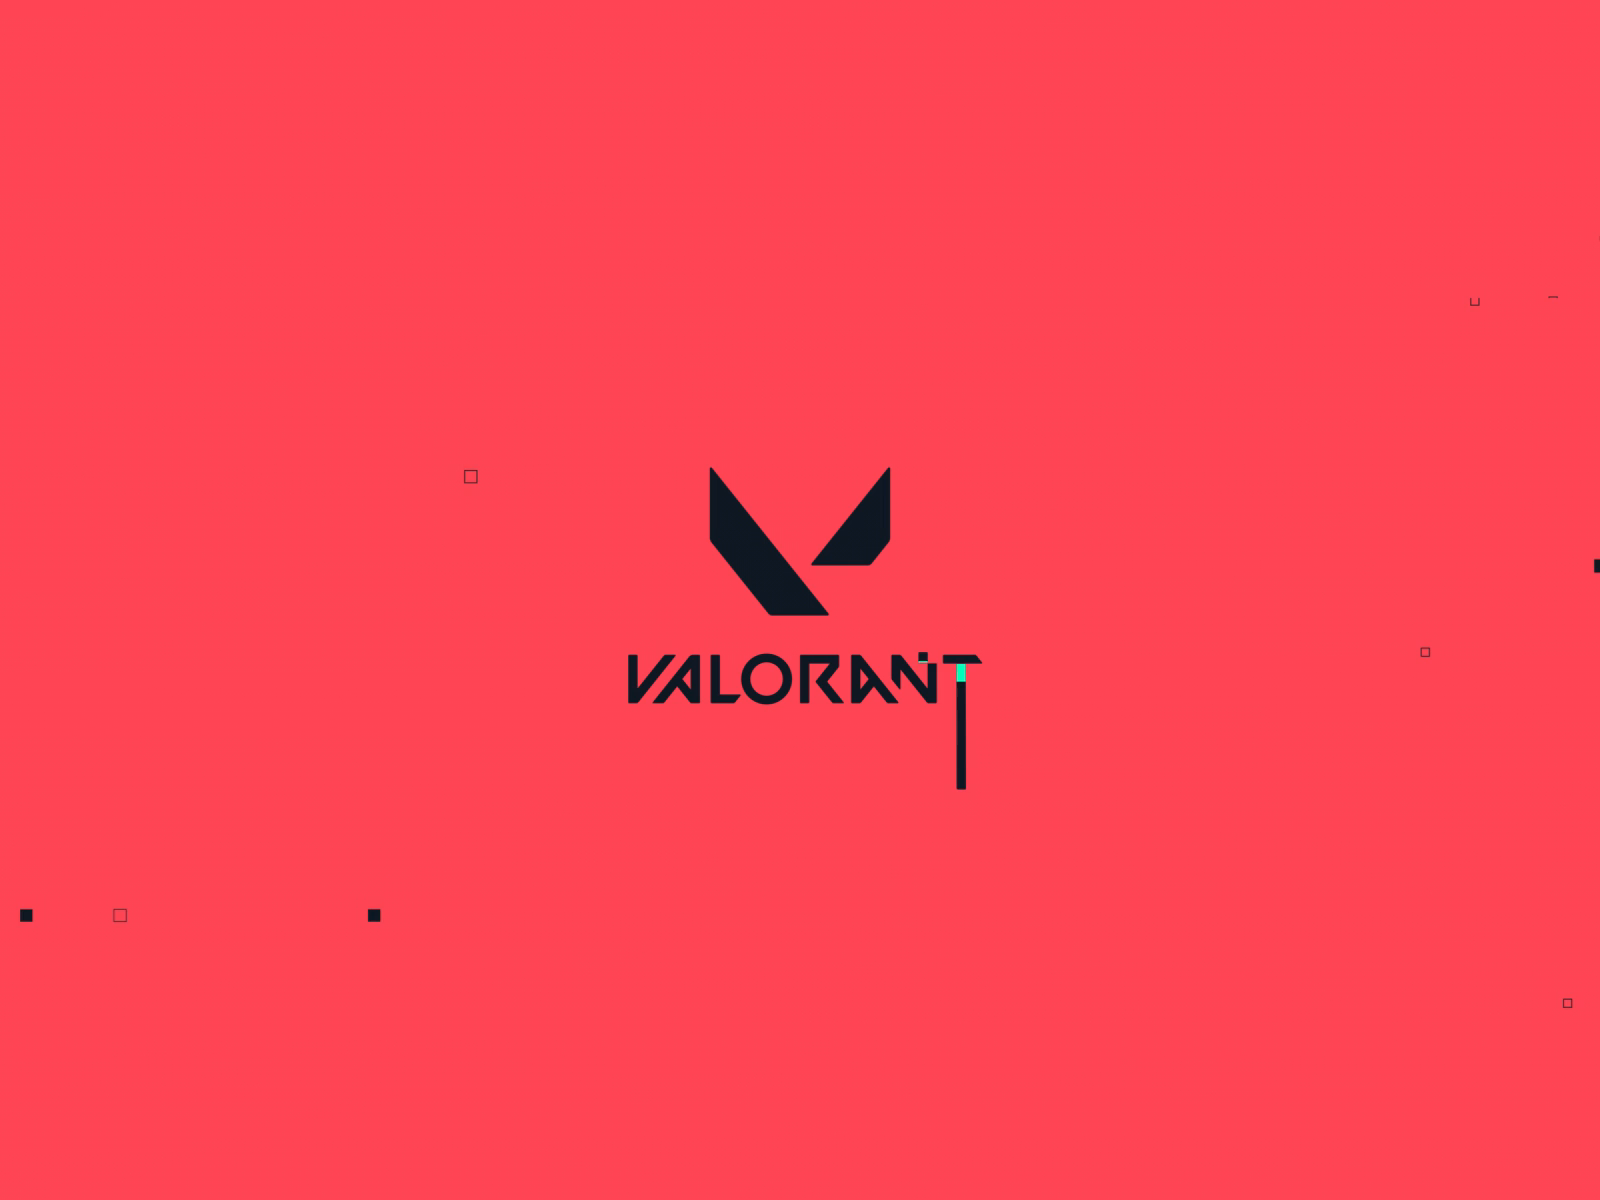 Valorant Logo Animation by Nicolas Girard on Dribbble